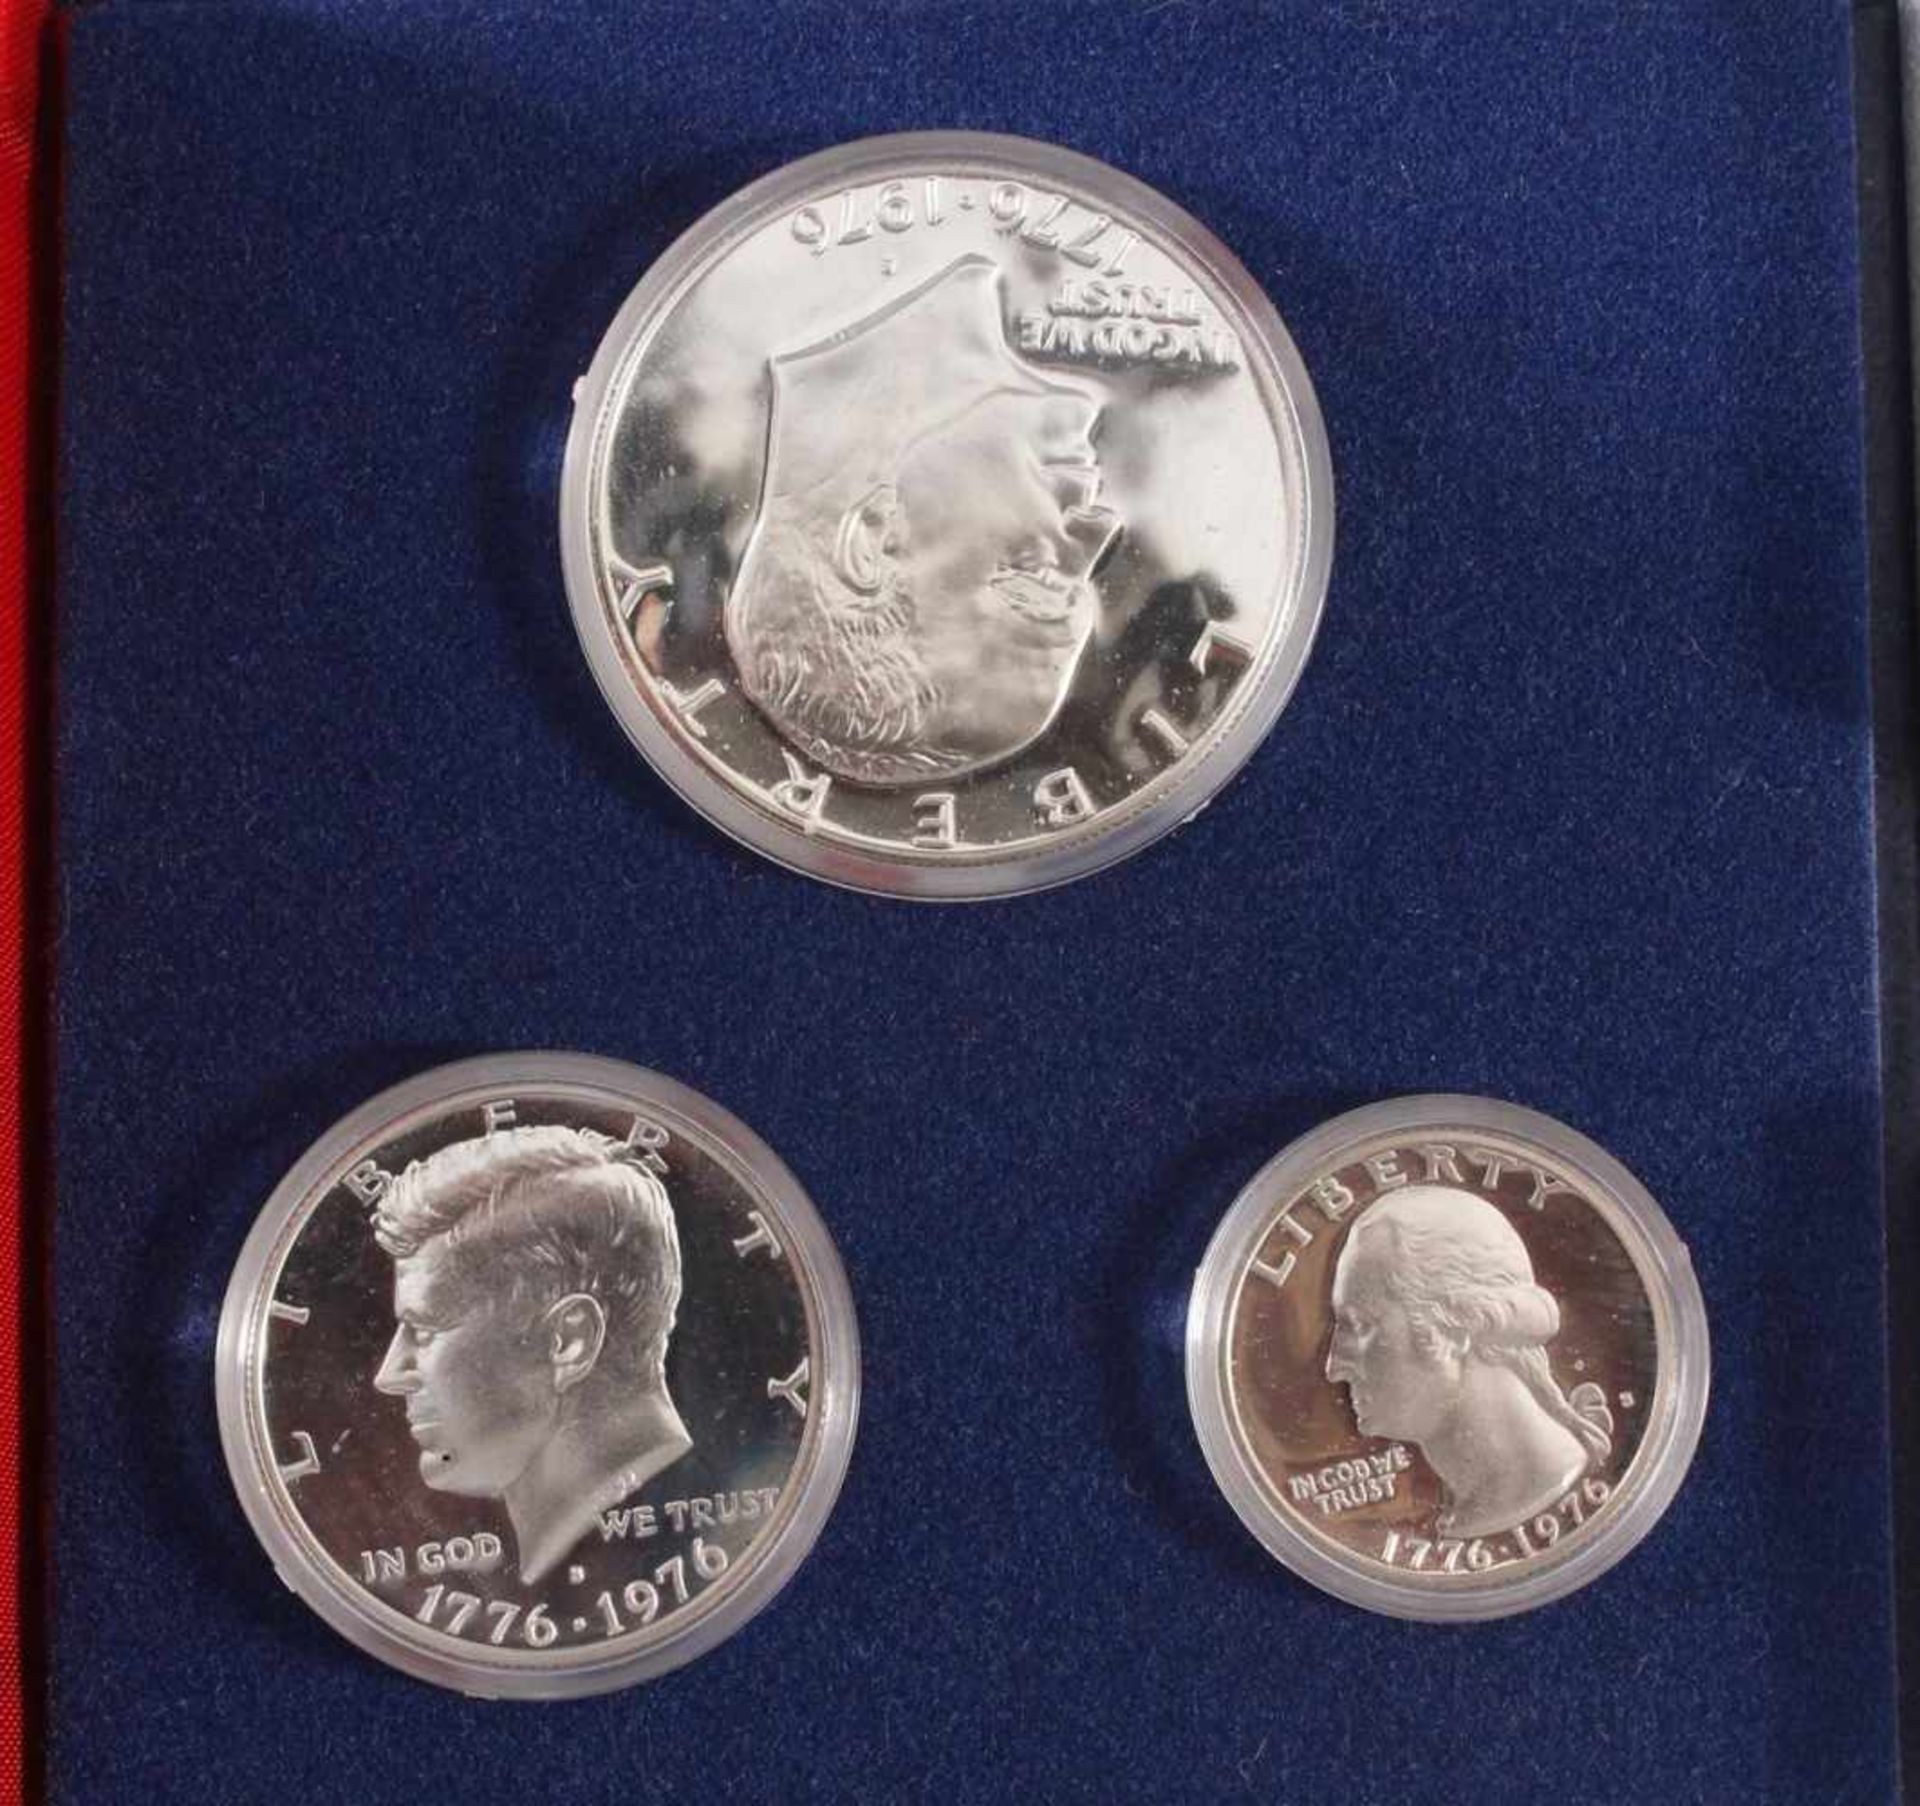 Münzen und Silbermünzen KonvolutDabei USA, 1x Liberty Dollar, 4x Half Dollar, 7x Quarter Dollar, USA - Bild 5 aus 5